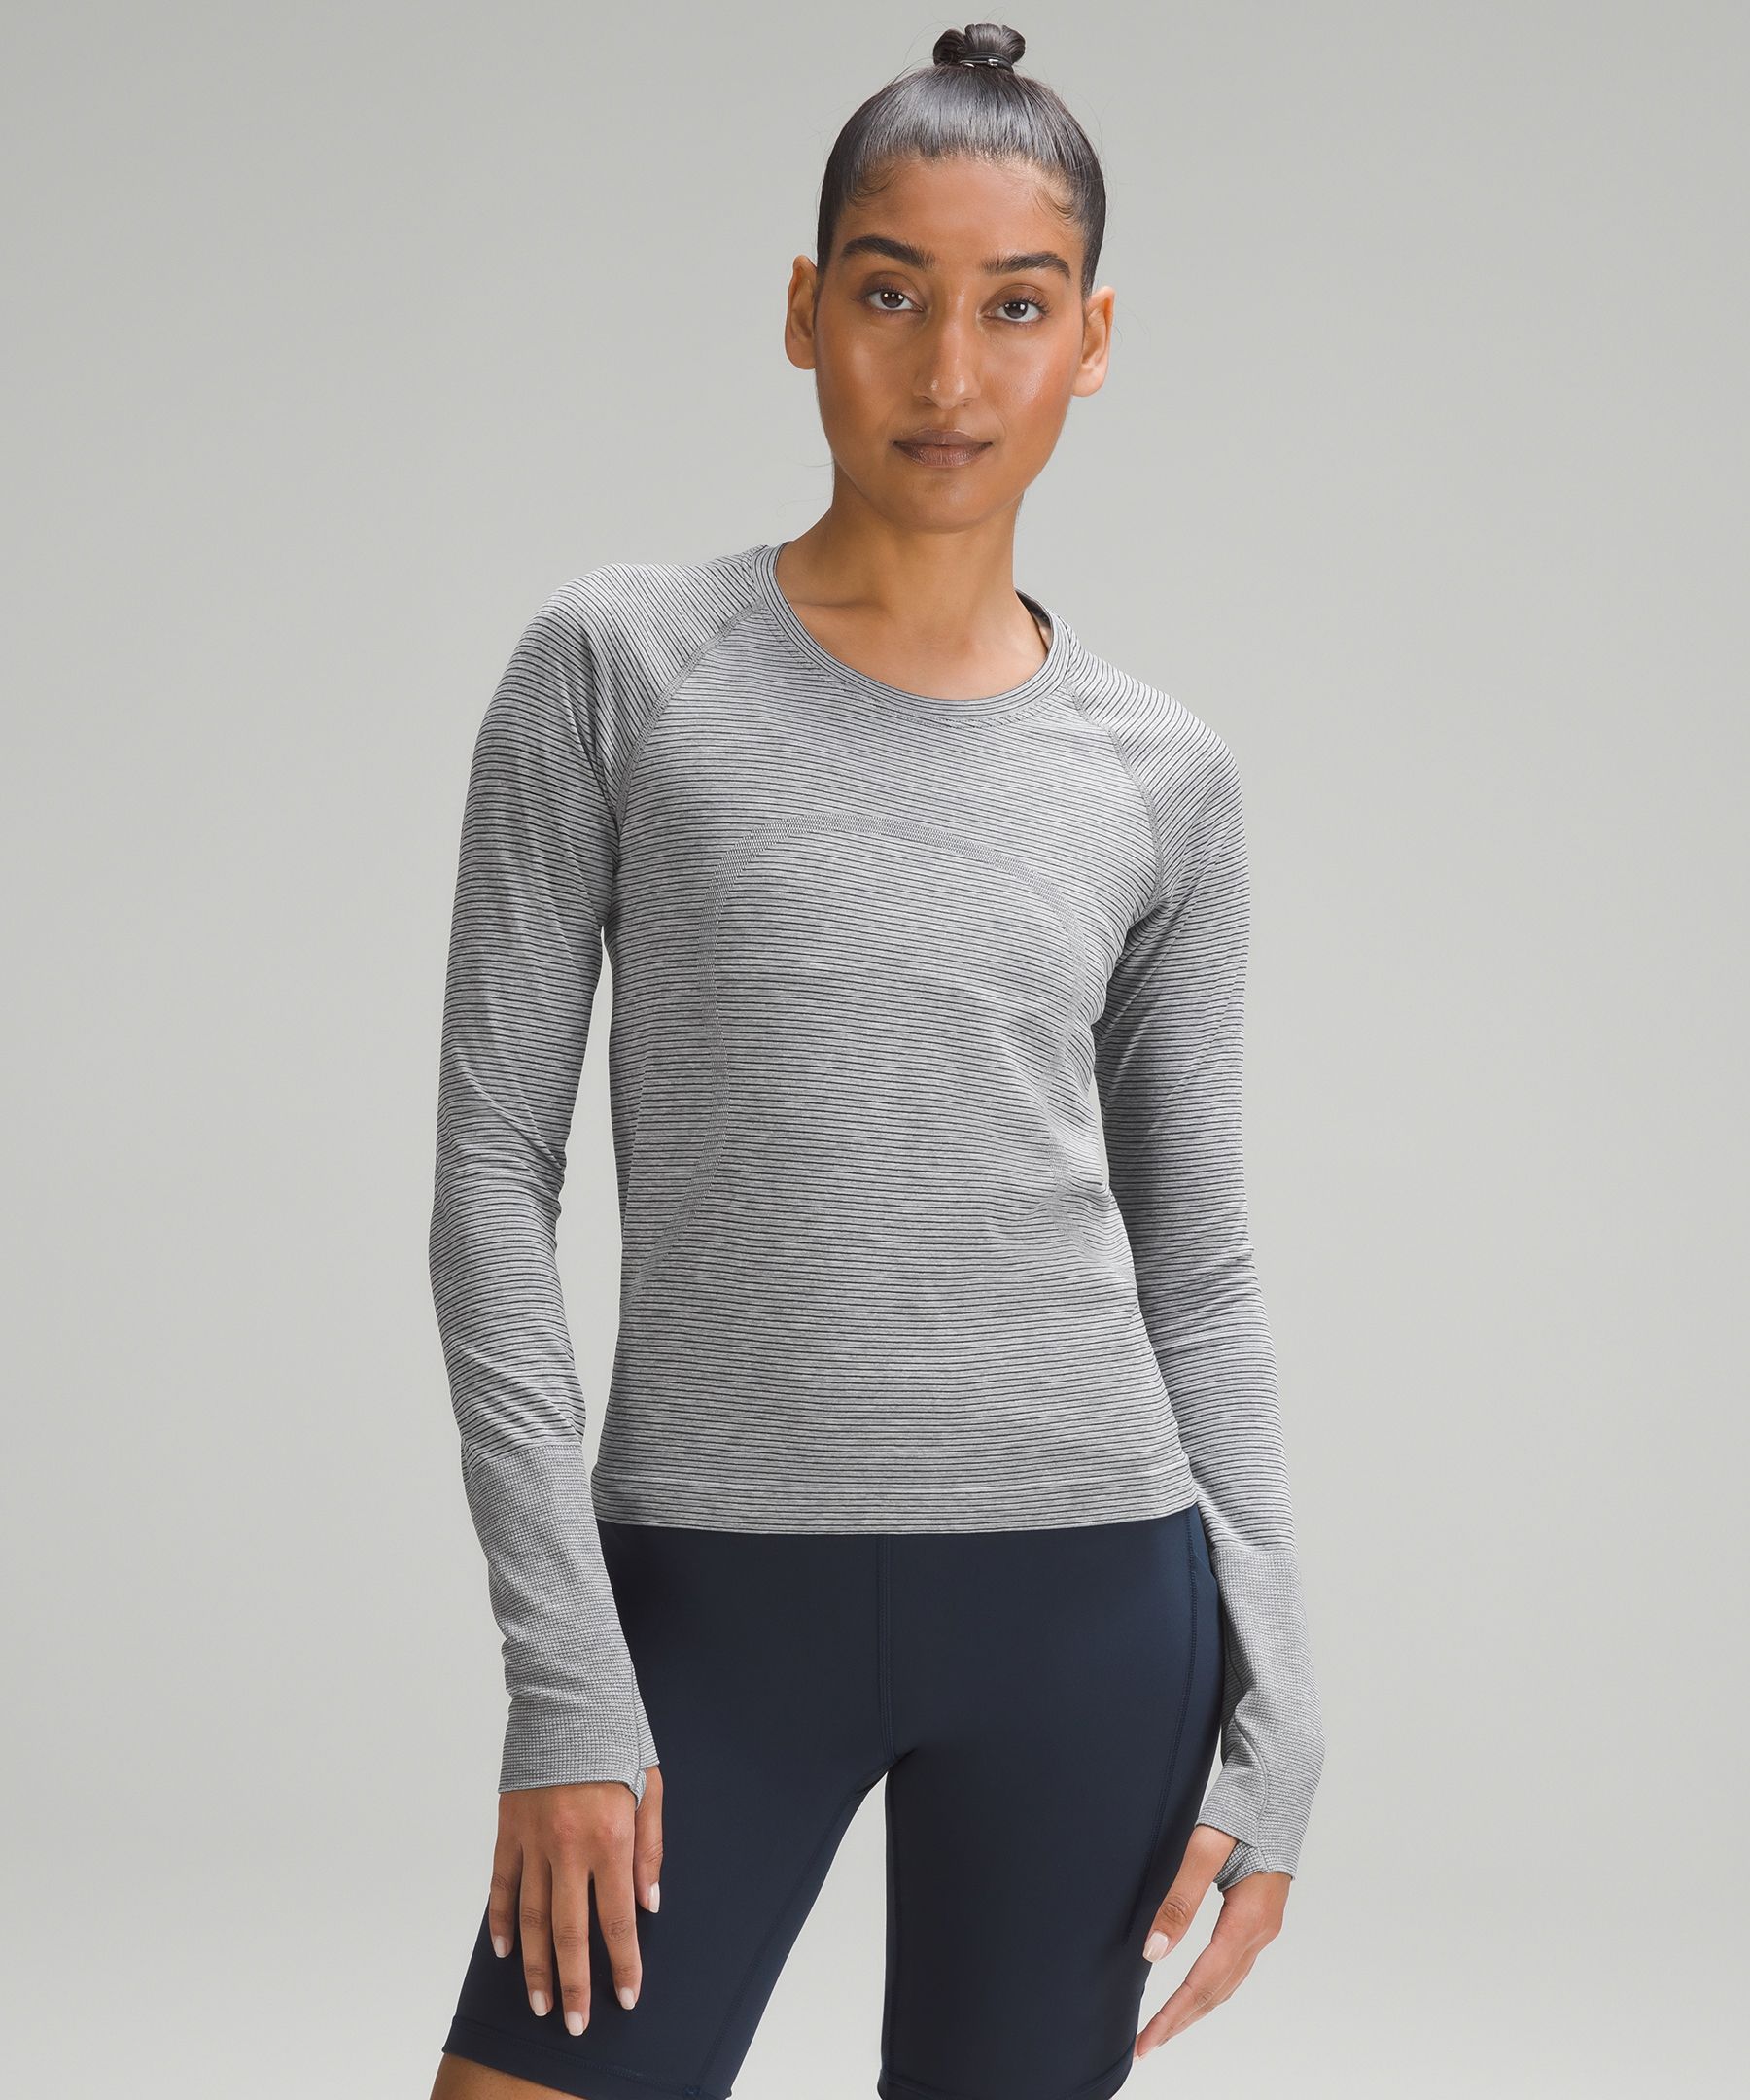 Swiftly Tech Long Sleeve Shirt 2.0 *Race Length | Women's Long Sleeve ...